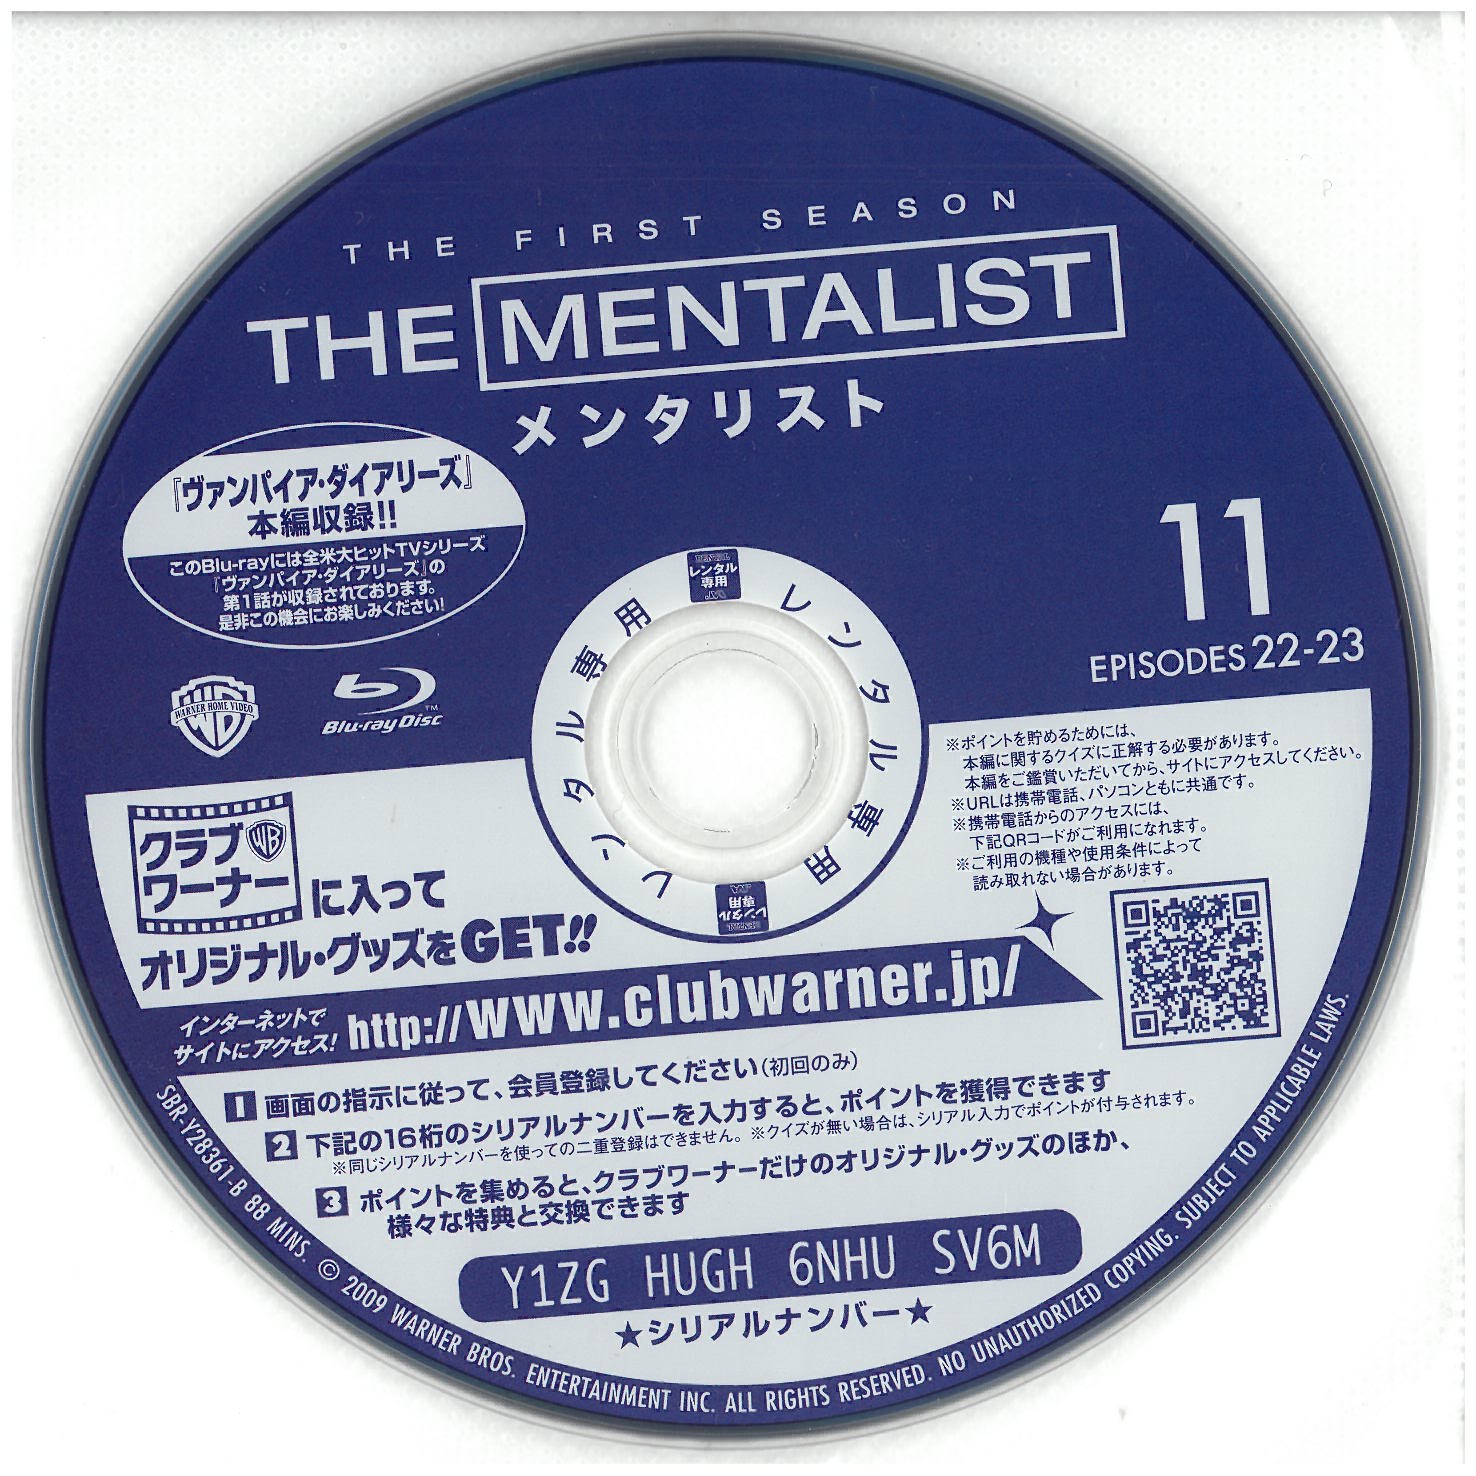 THE MENTALIST メンタリスト ザ・ファーストシーズン vol.11 Blu-ray SBR-Y28361-B【ケースなし】中古DVD_f